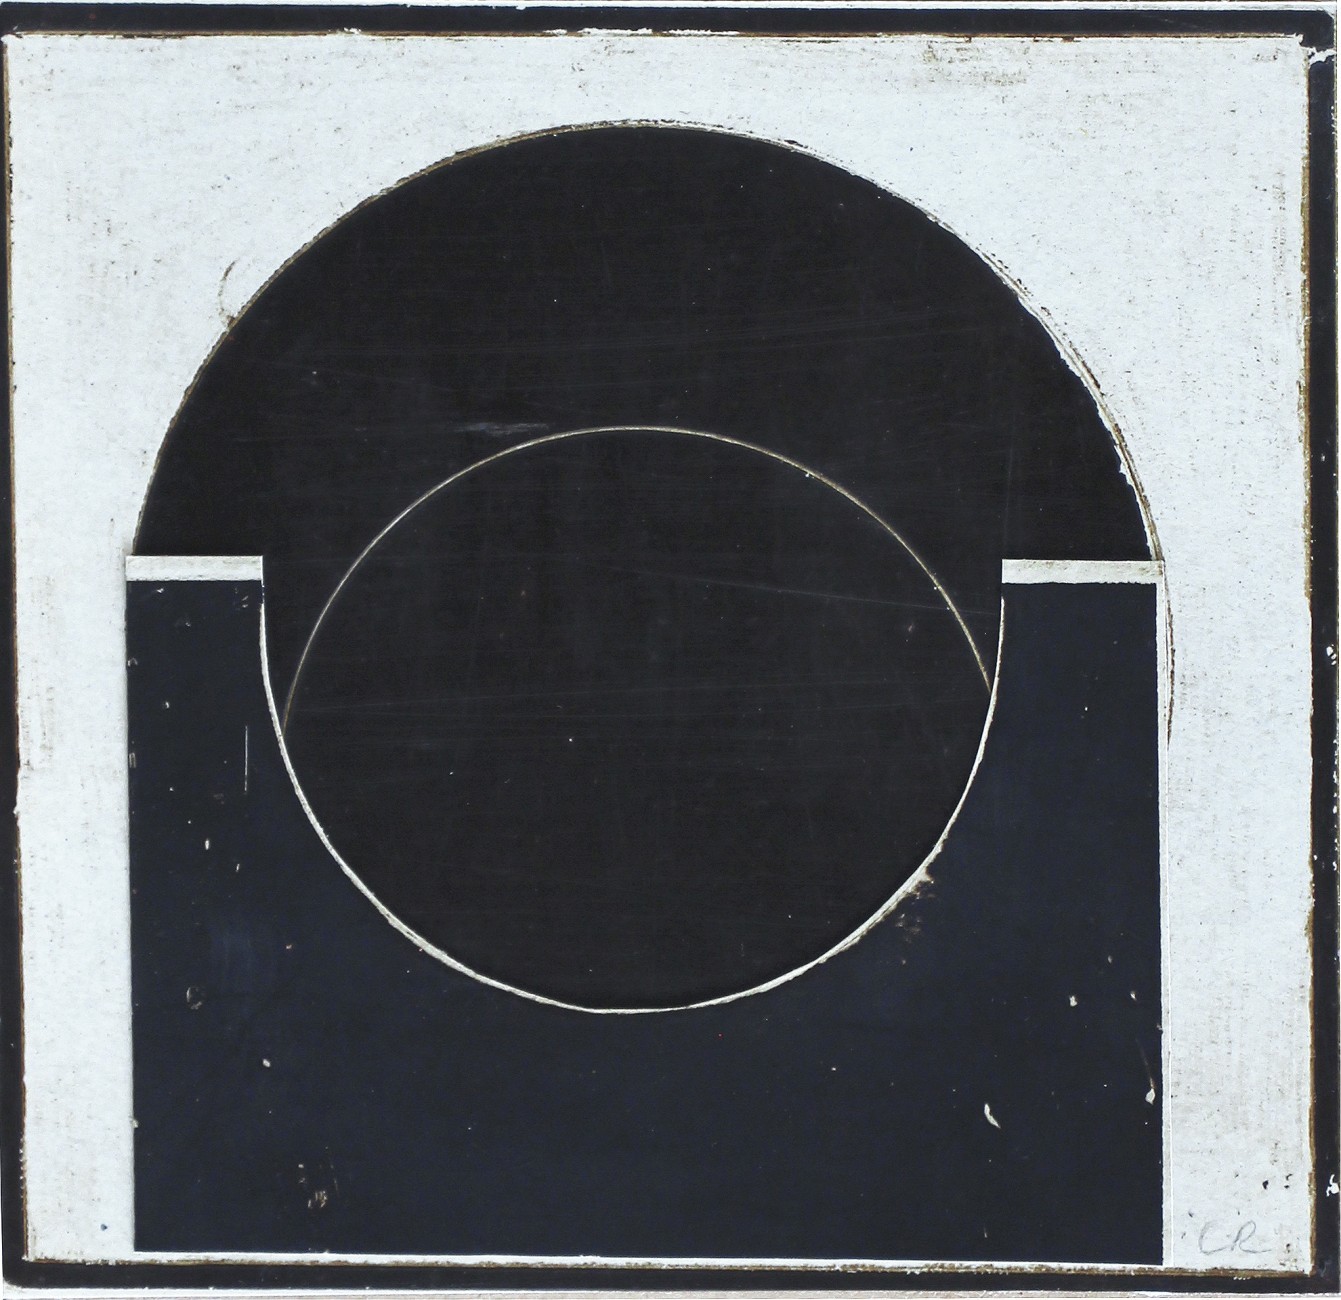 Doble-Circulo-1-165x17cm